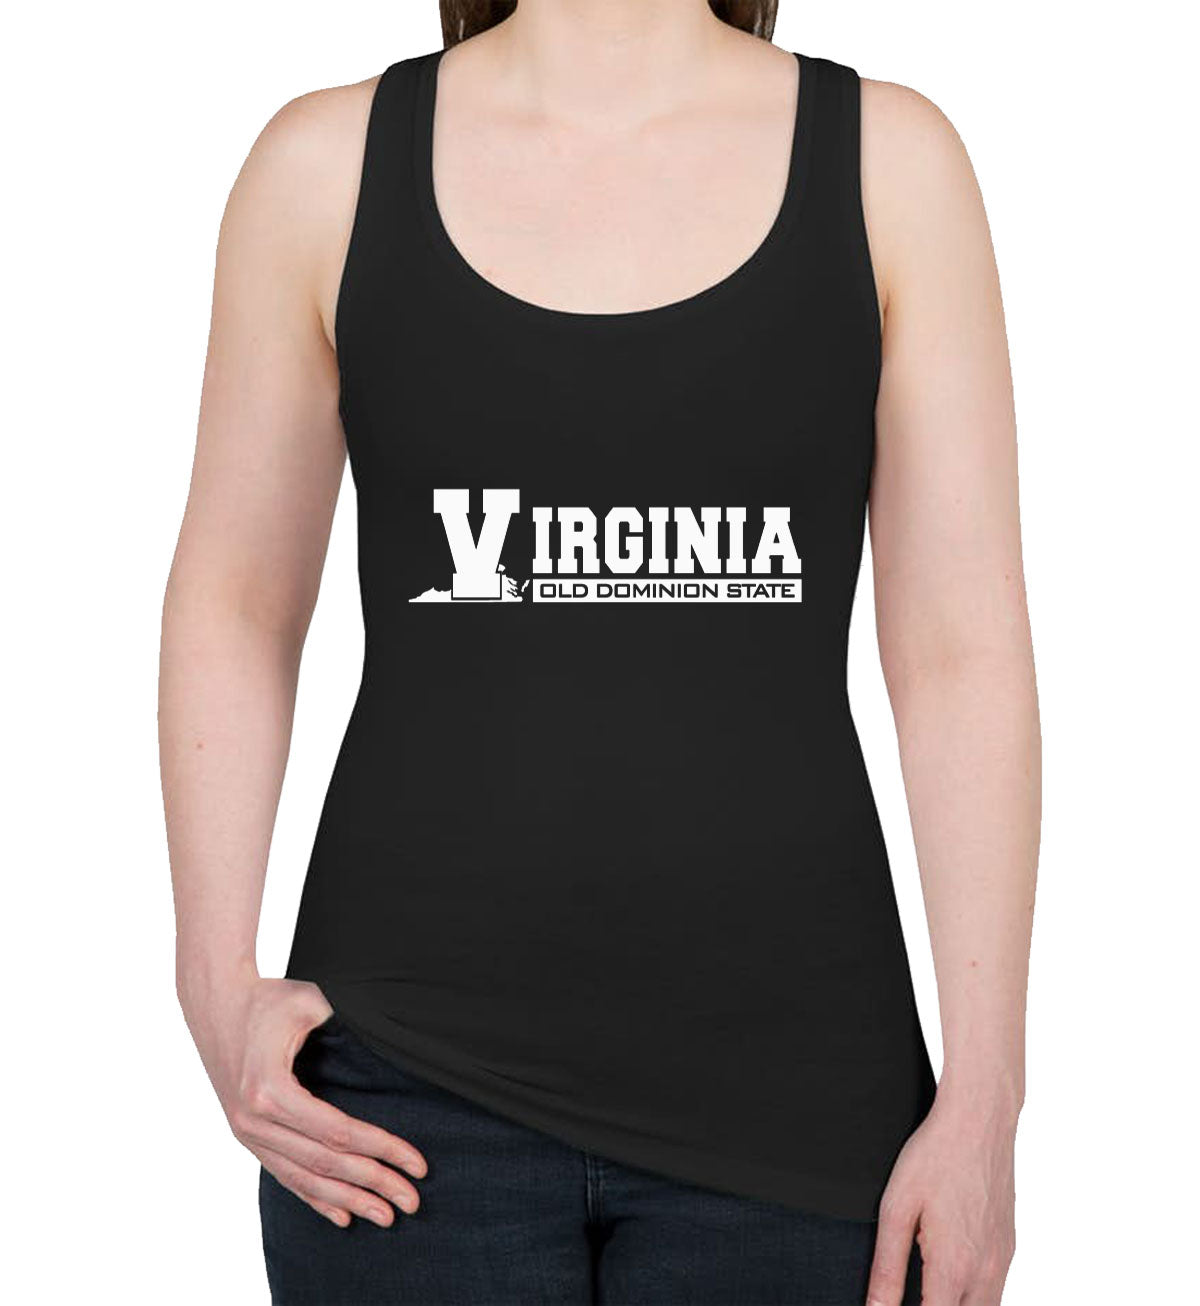 Virginia Old Dominion State Women's Racerback Tank Top